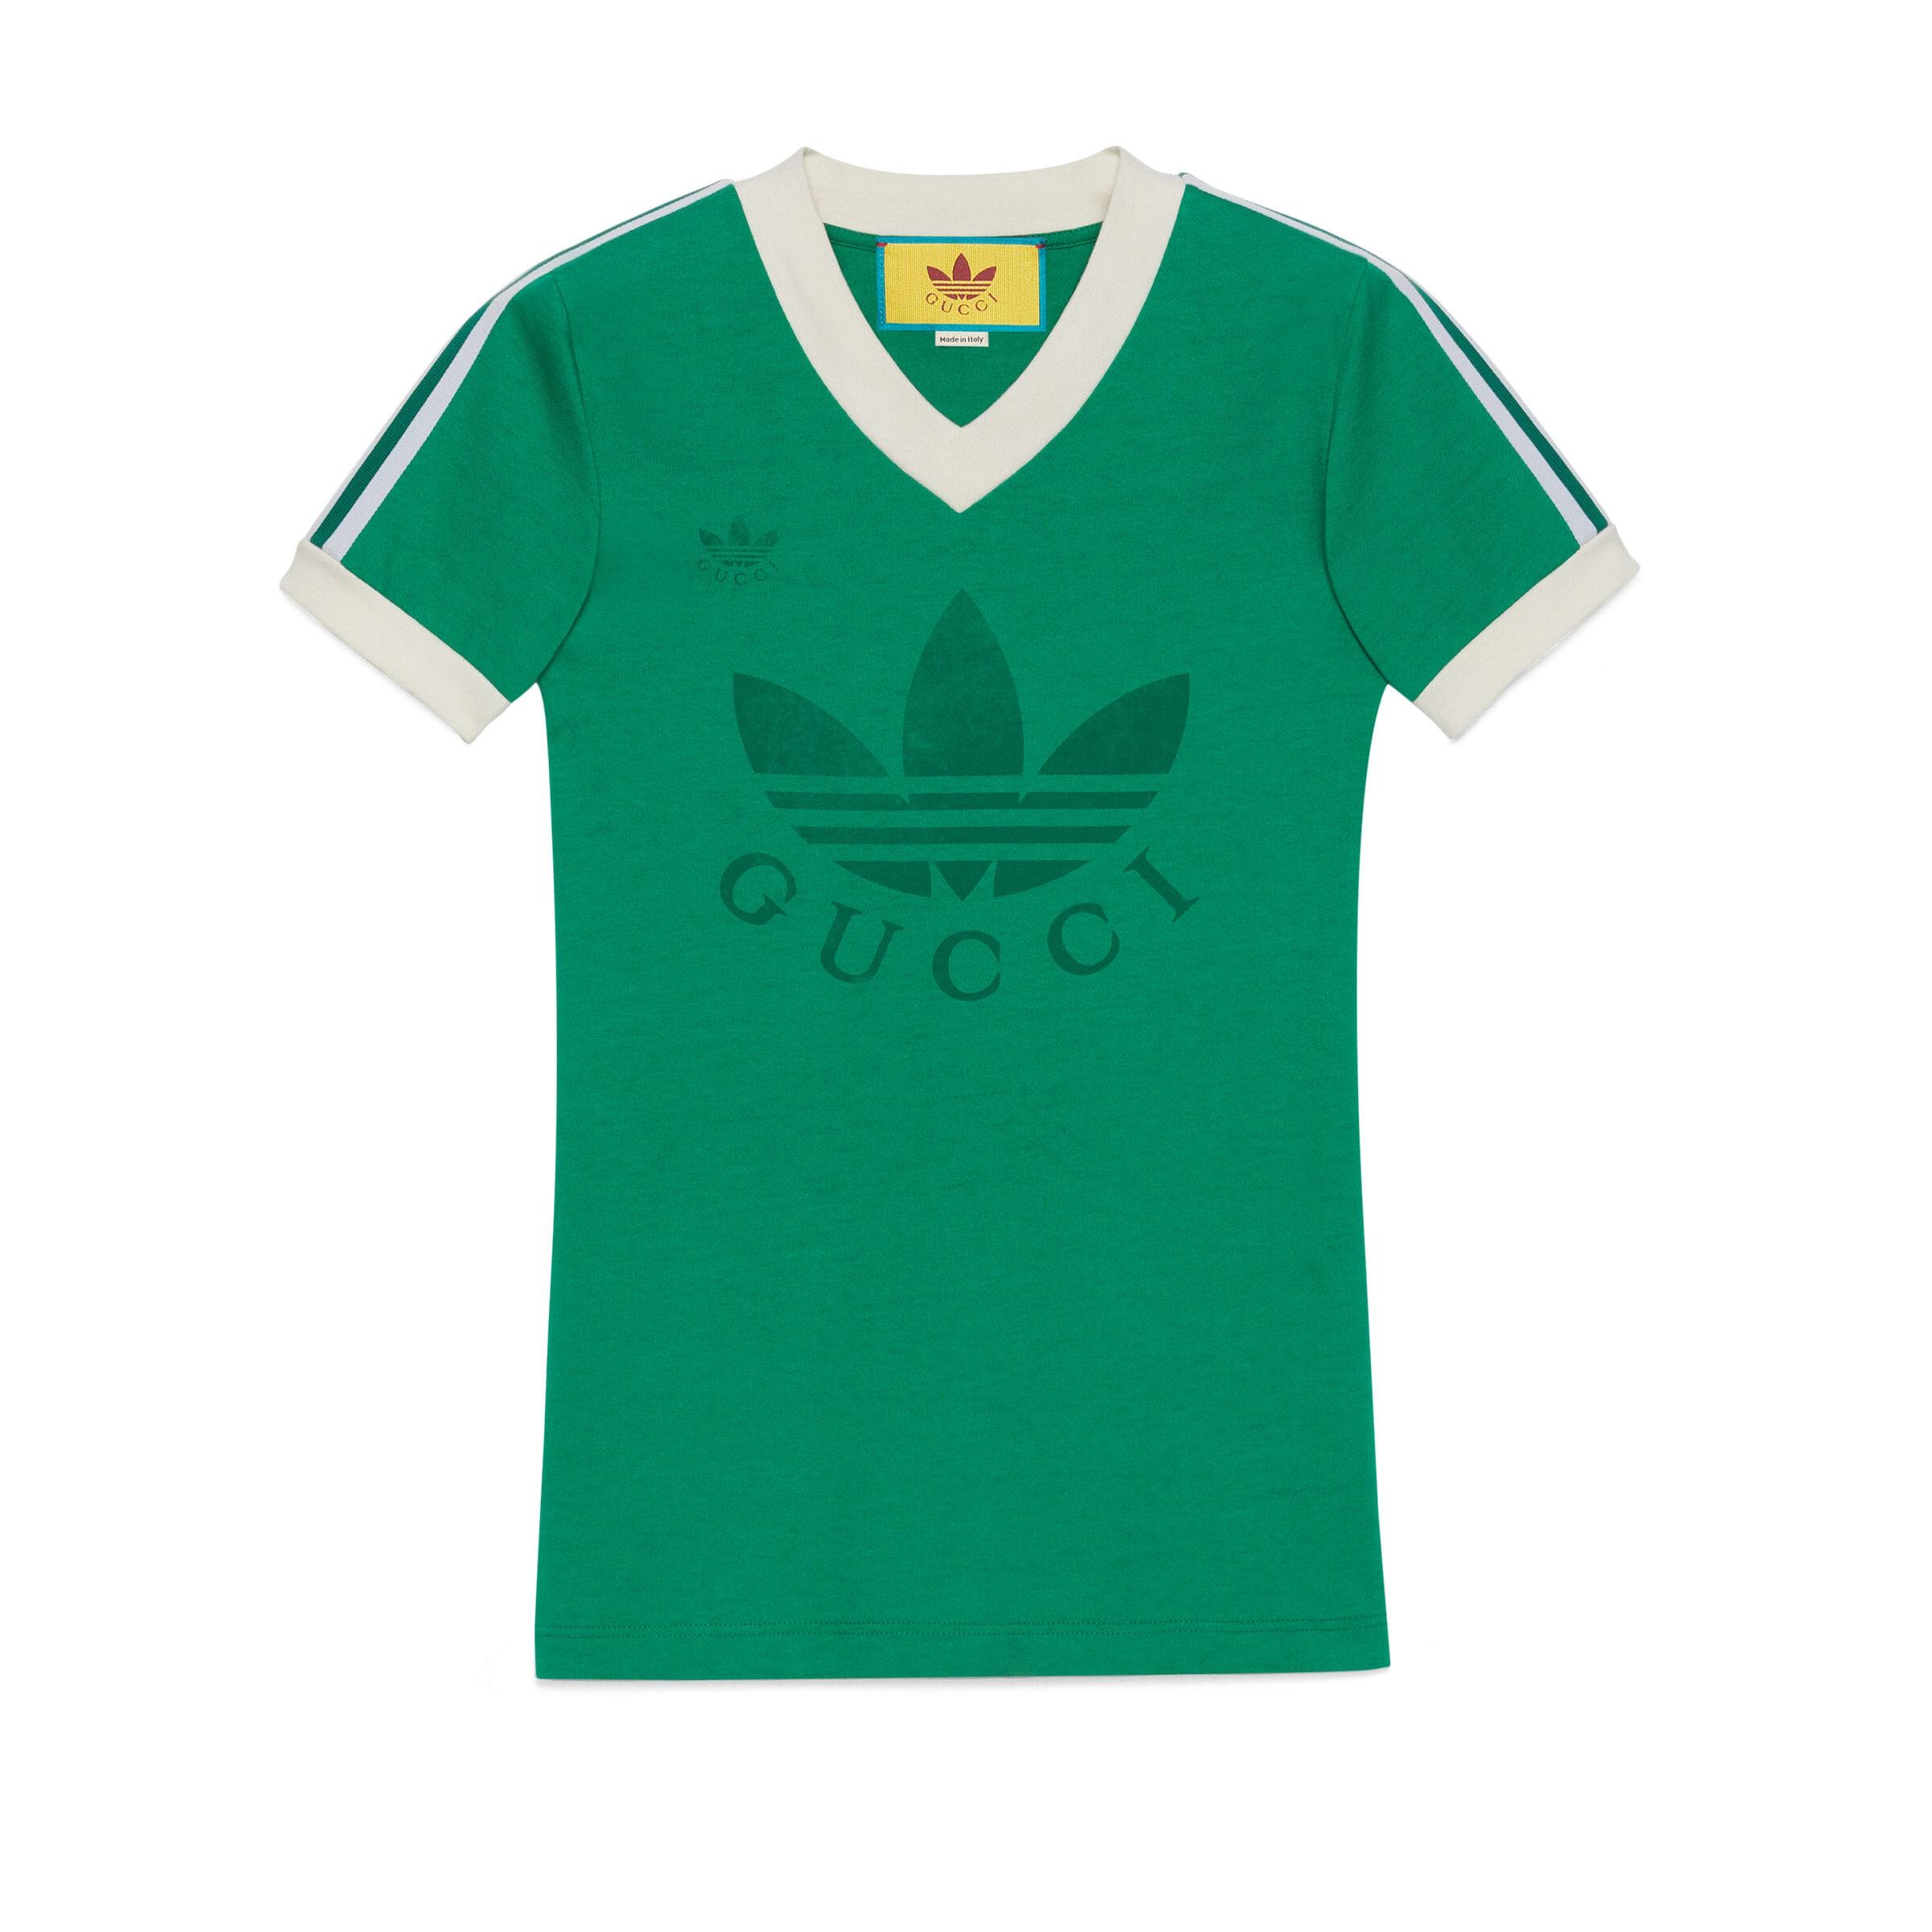 Gucci Adidas X T-shirt in Green